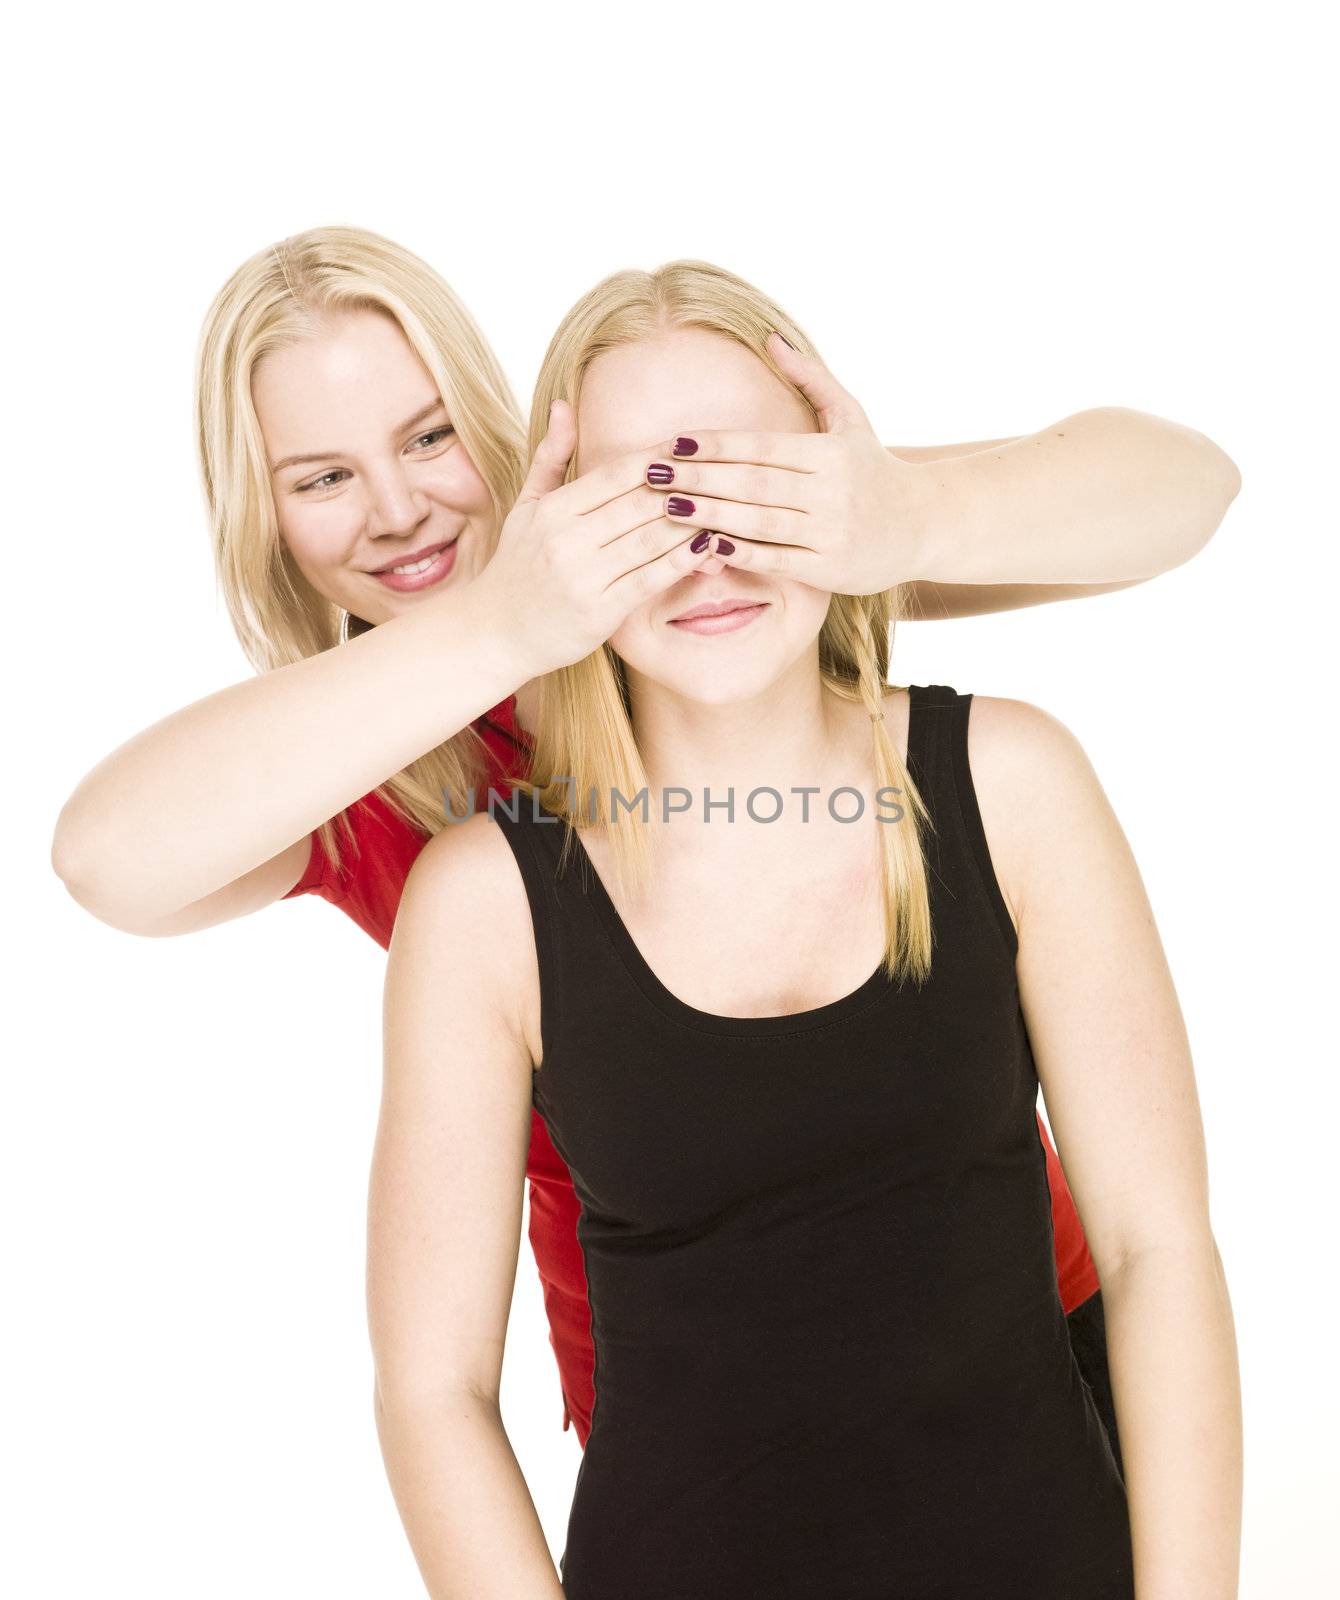 Girls playing Peek-a-boo by gemenacom